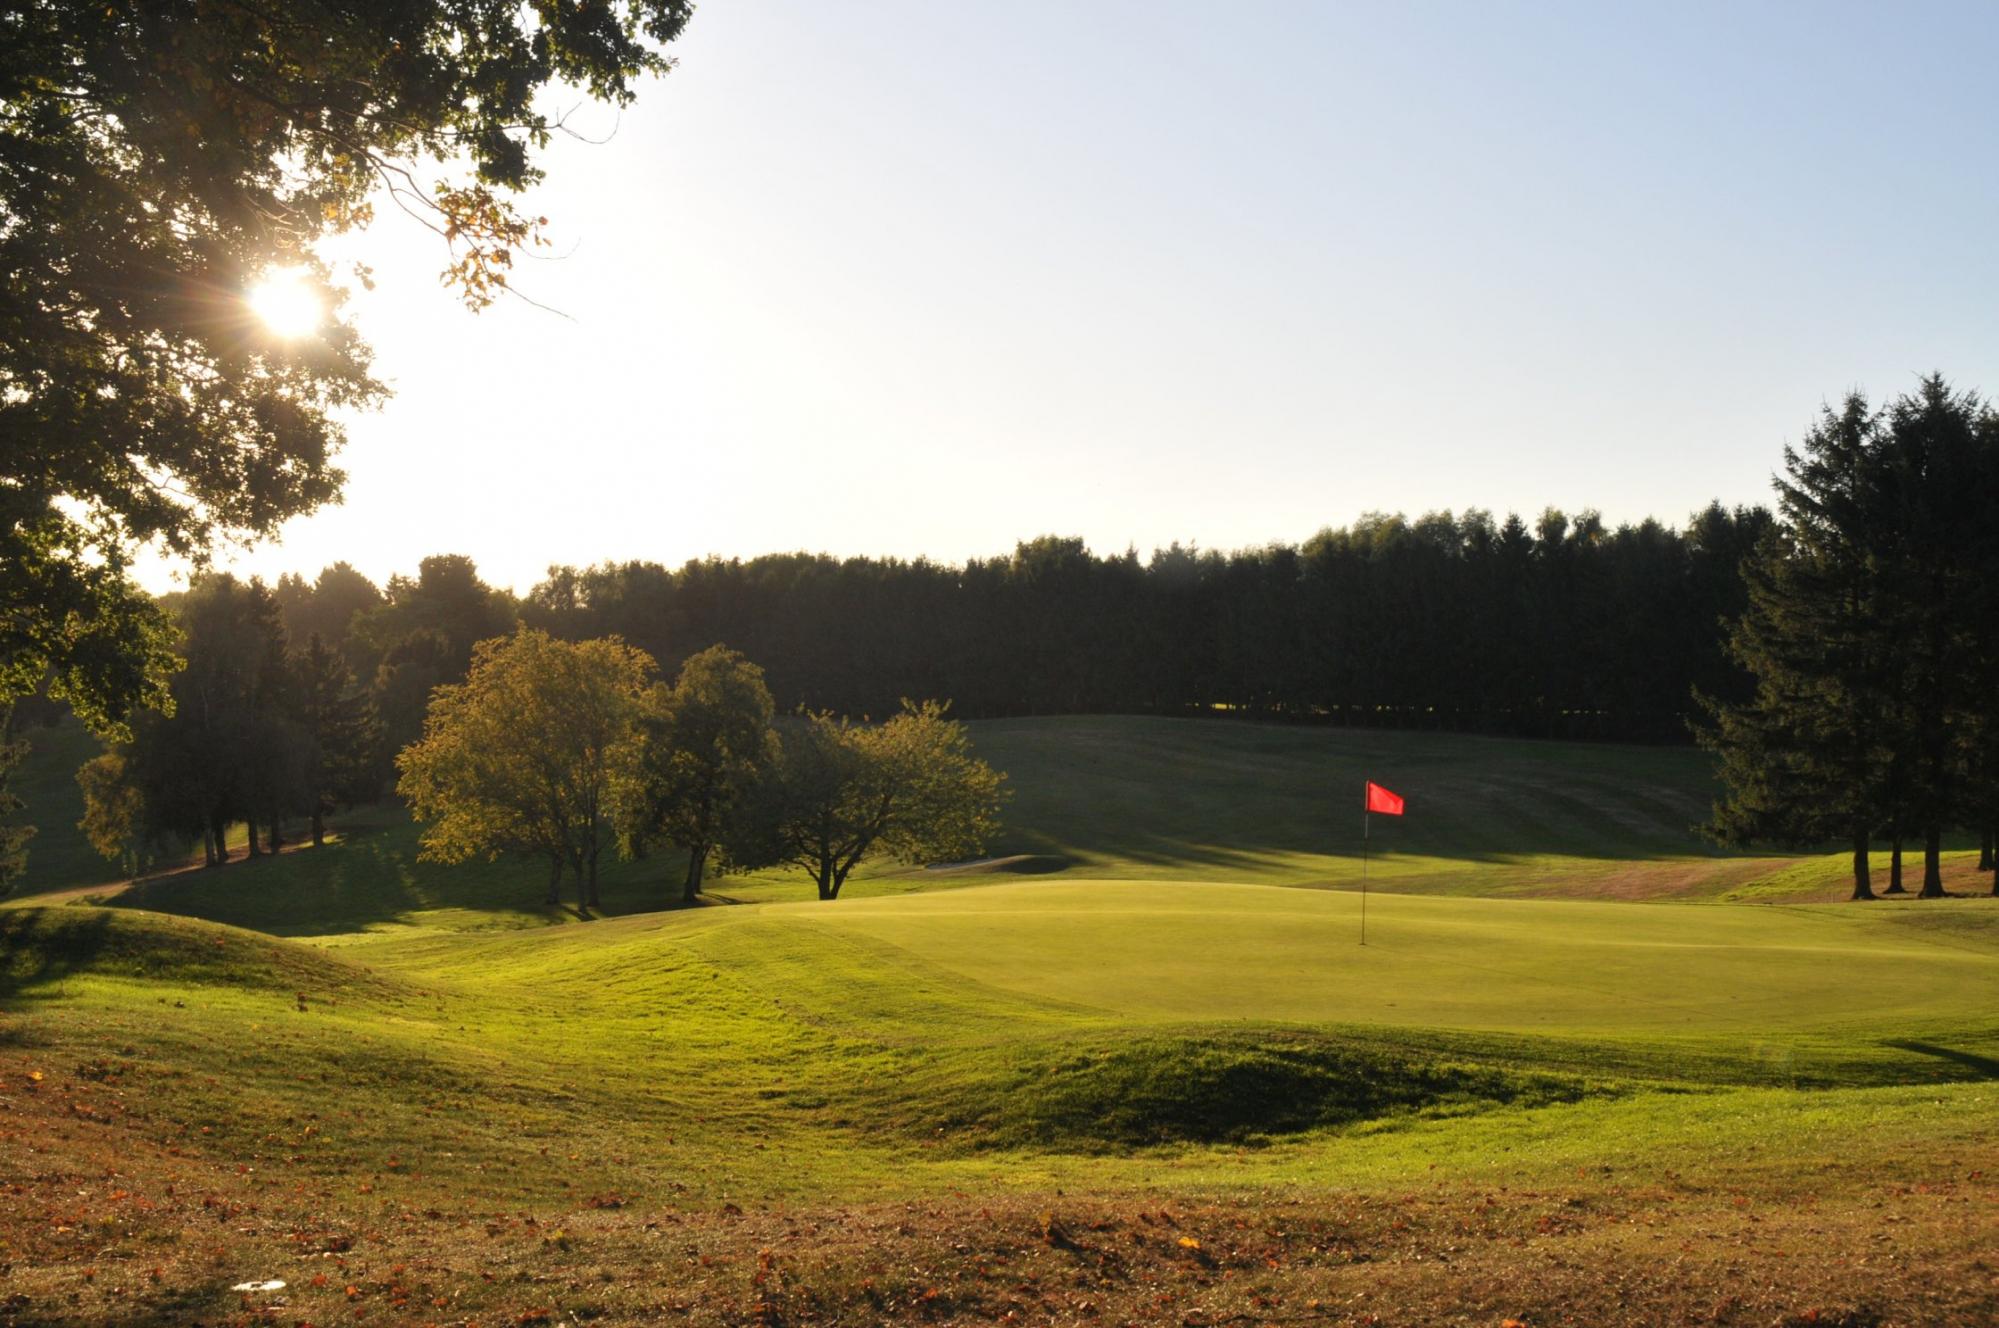 View Golf Club de Louvain-la-Neuve's beautiful golf course within dramatic Brussels Waterloo & Mons.